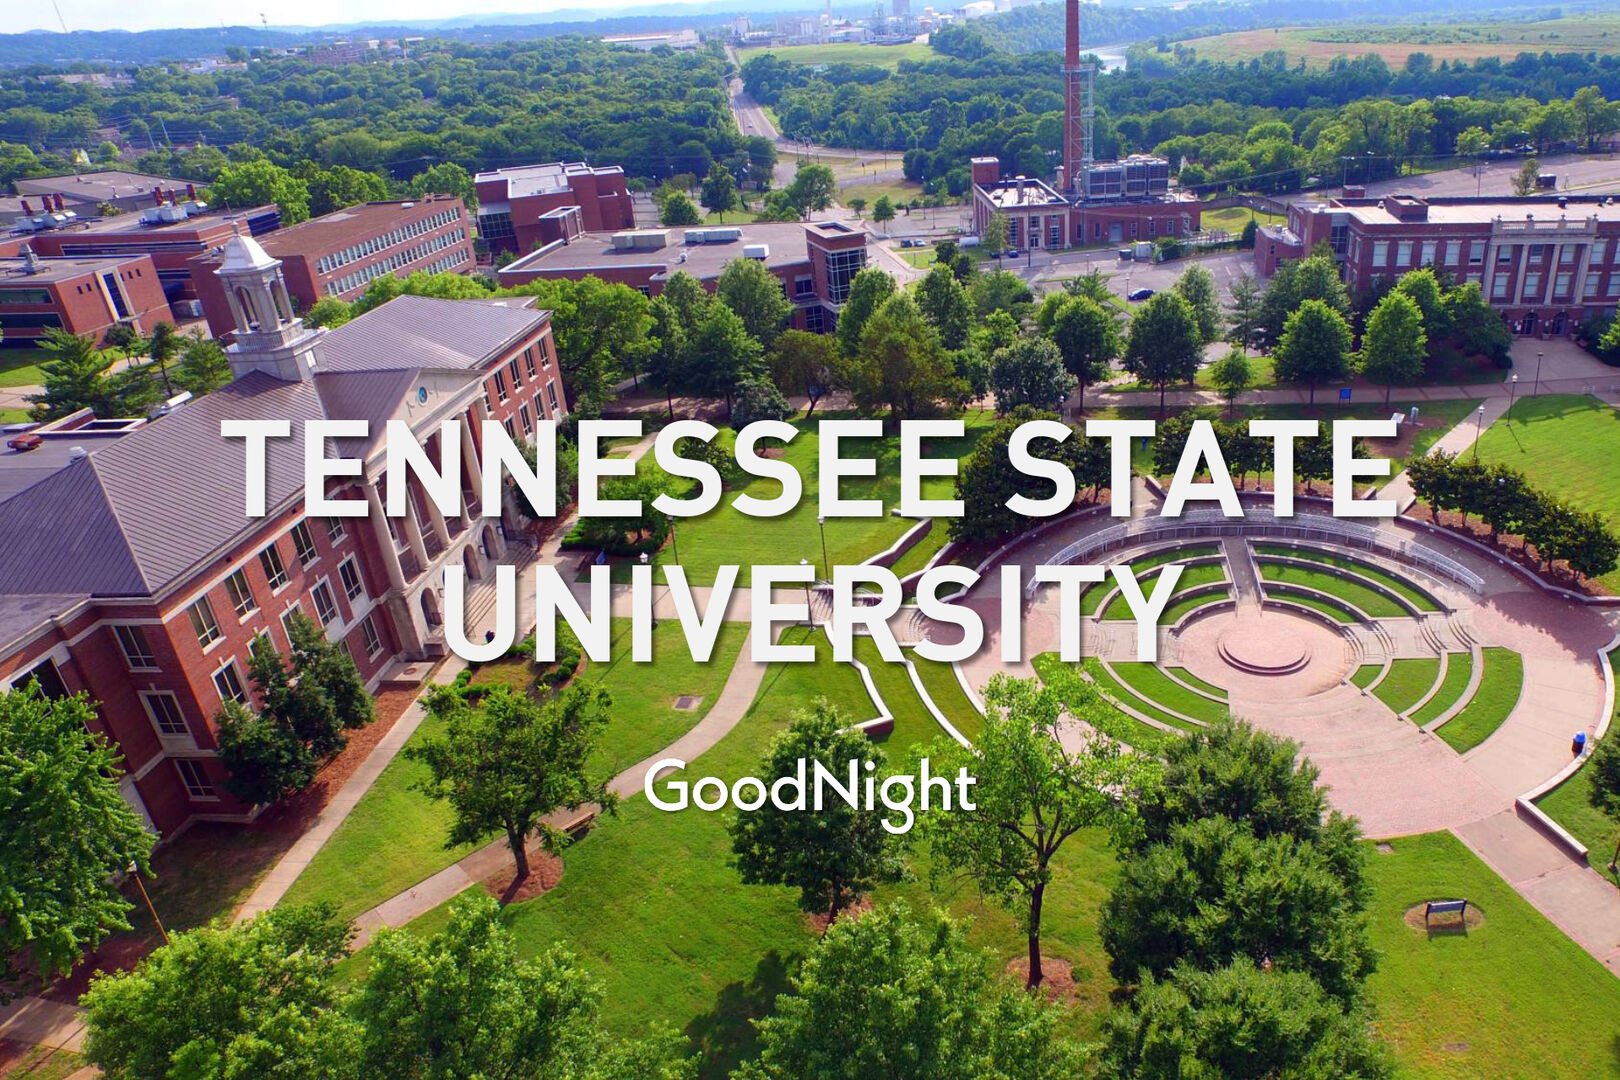 9 mins: Tennessee State University